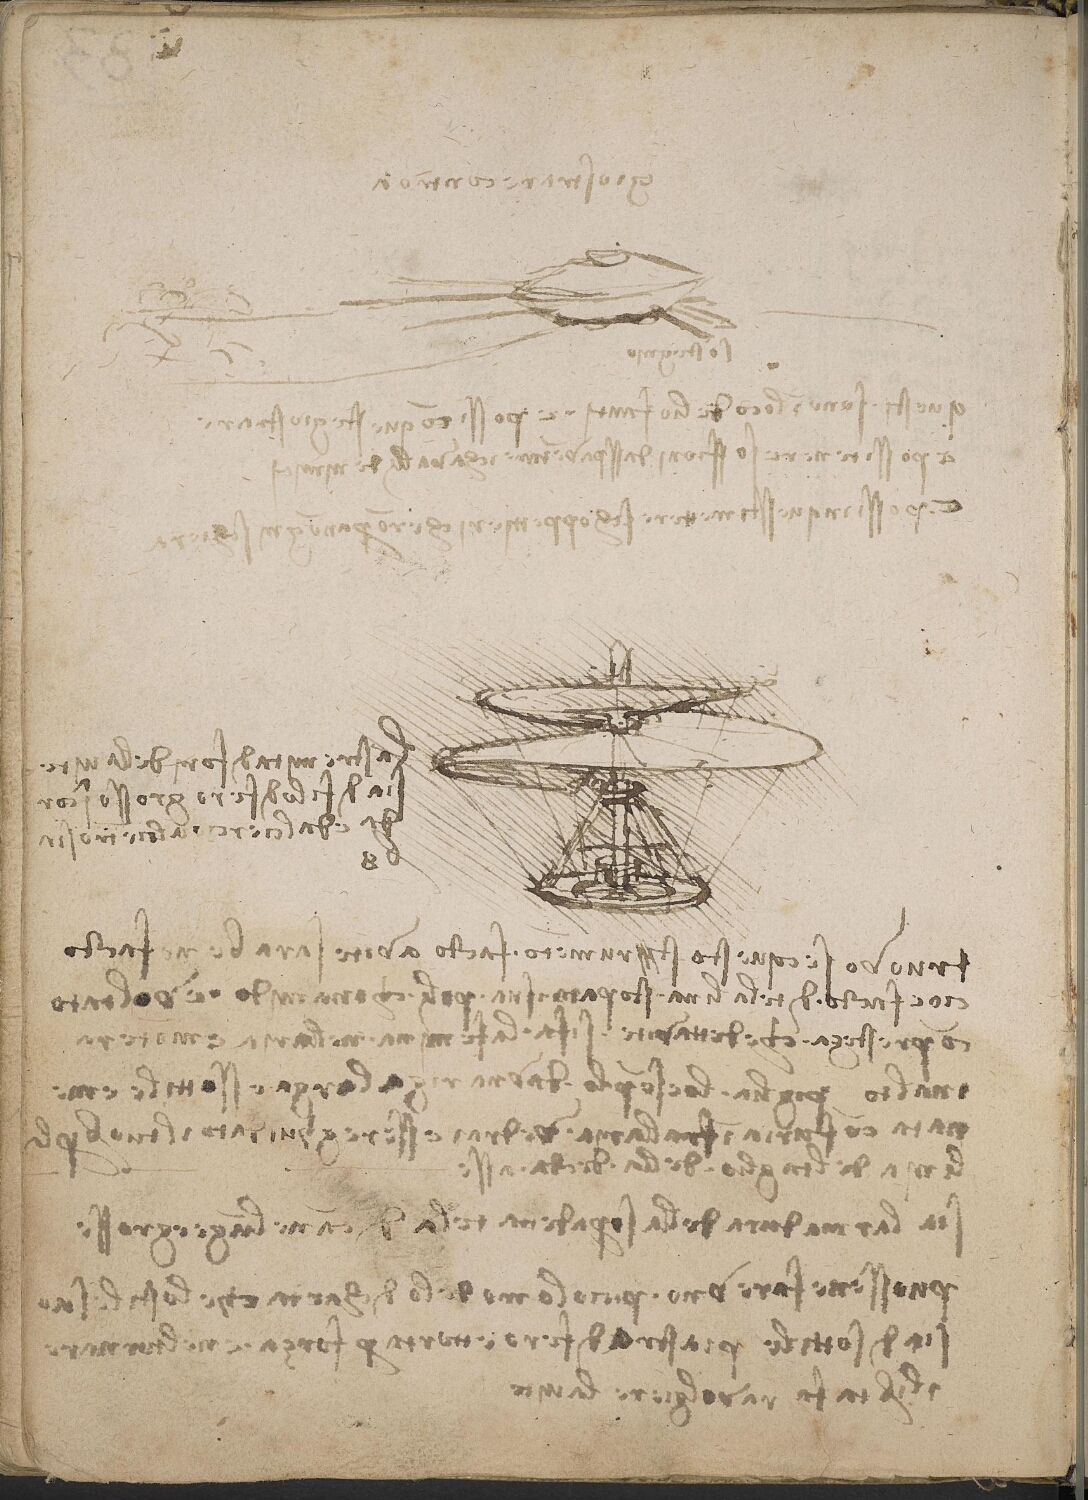 Ms 2173 (Manuscrit B), f. 83v : machine volante («vis aérienne »).